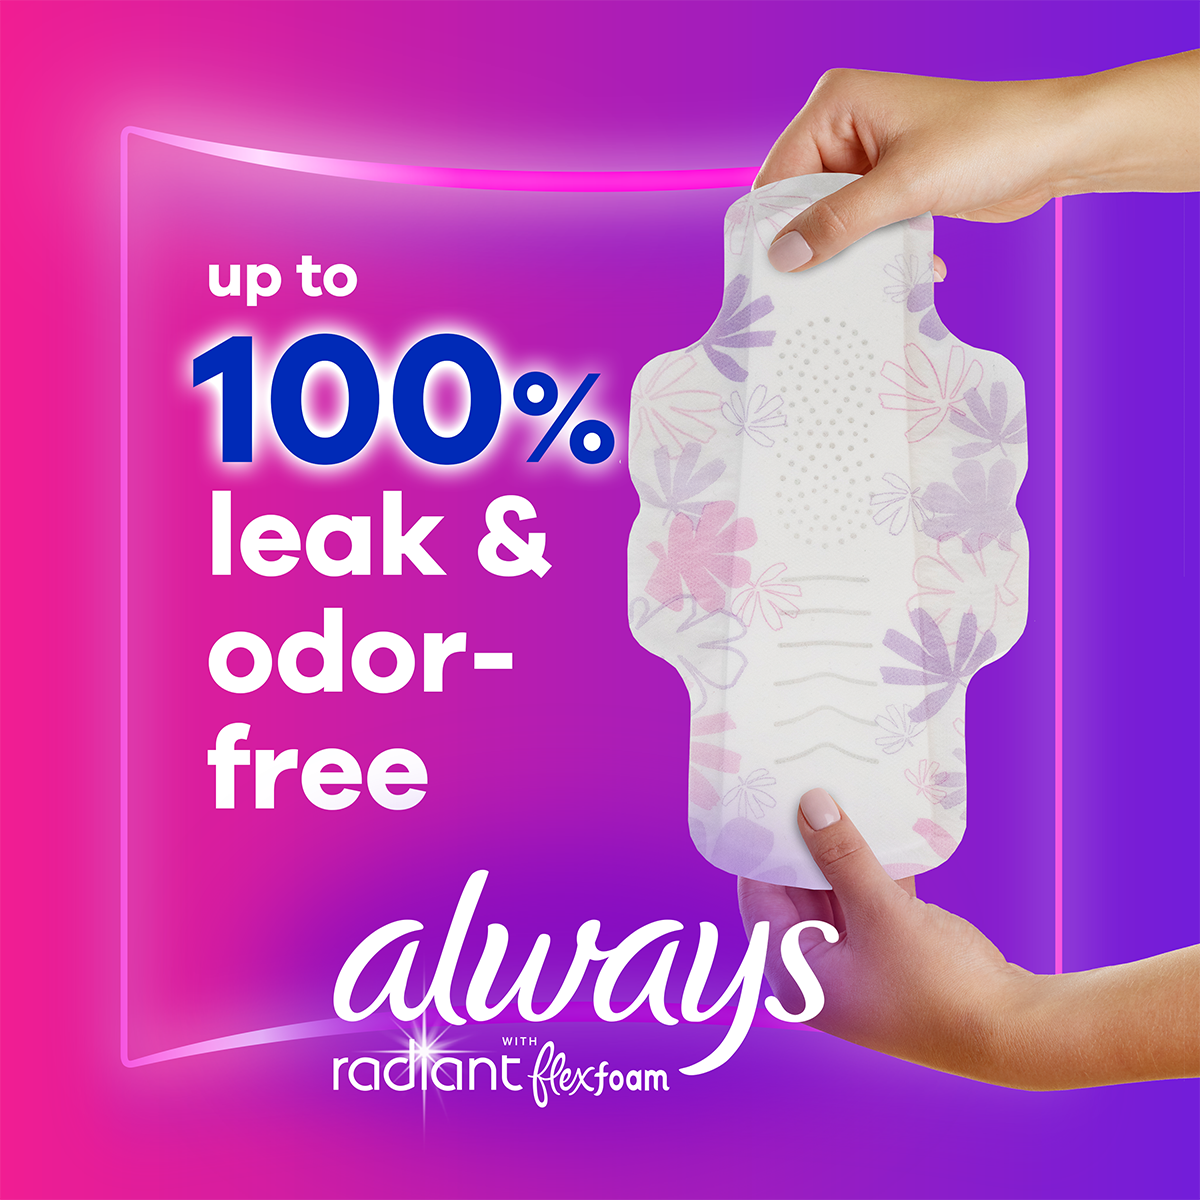 Up to 100% leak & odor-free